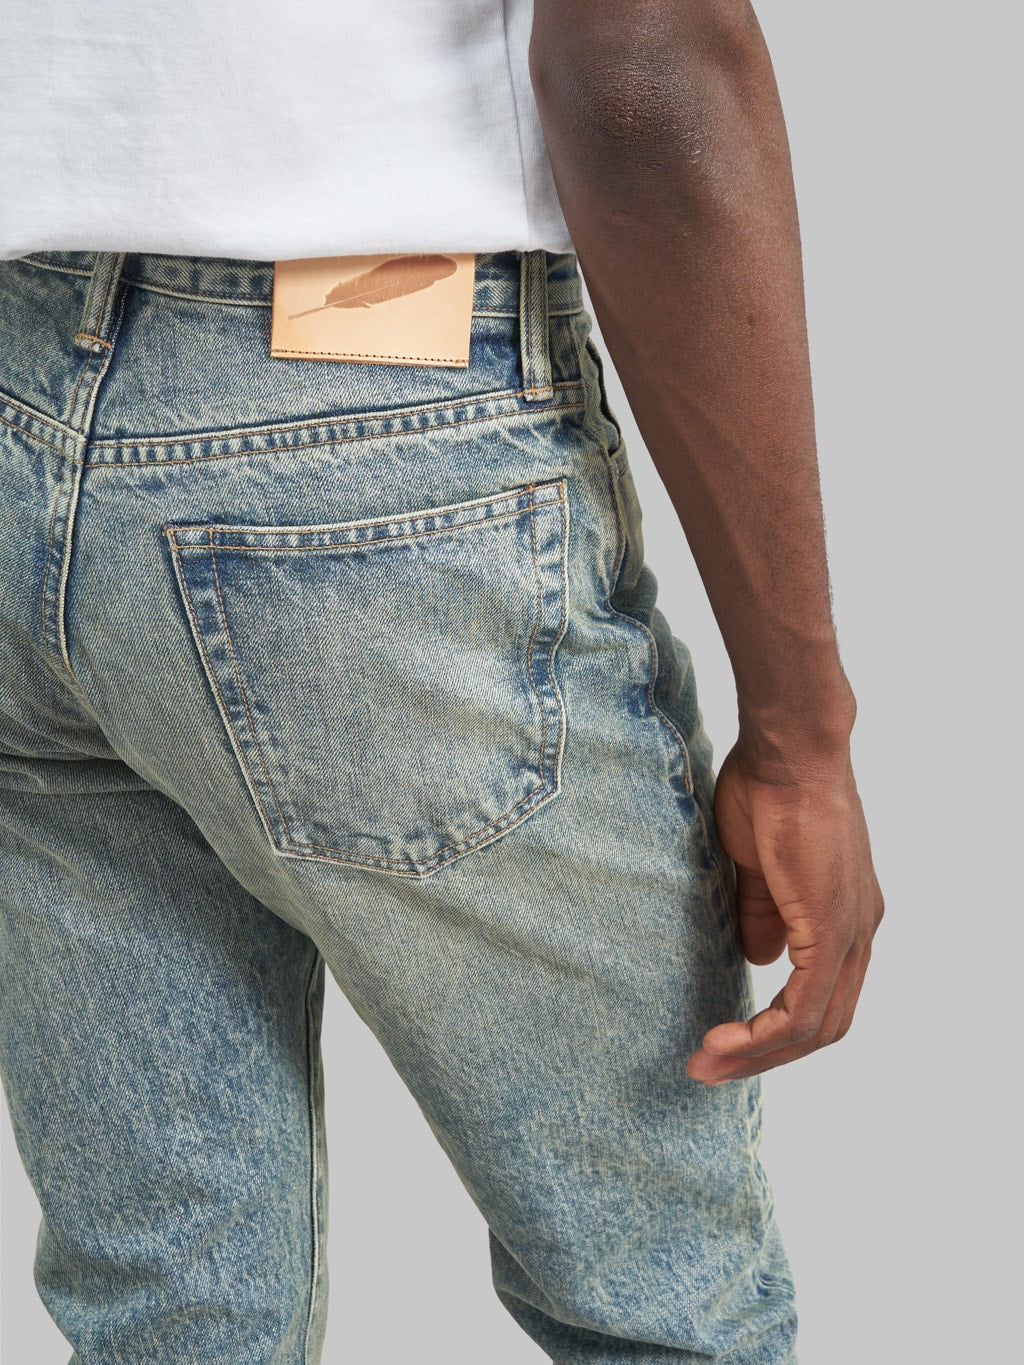 rogue territory strider light indigo wash selvedge jeans back pocket